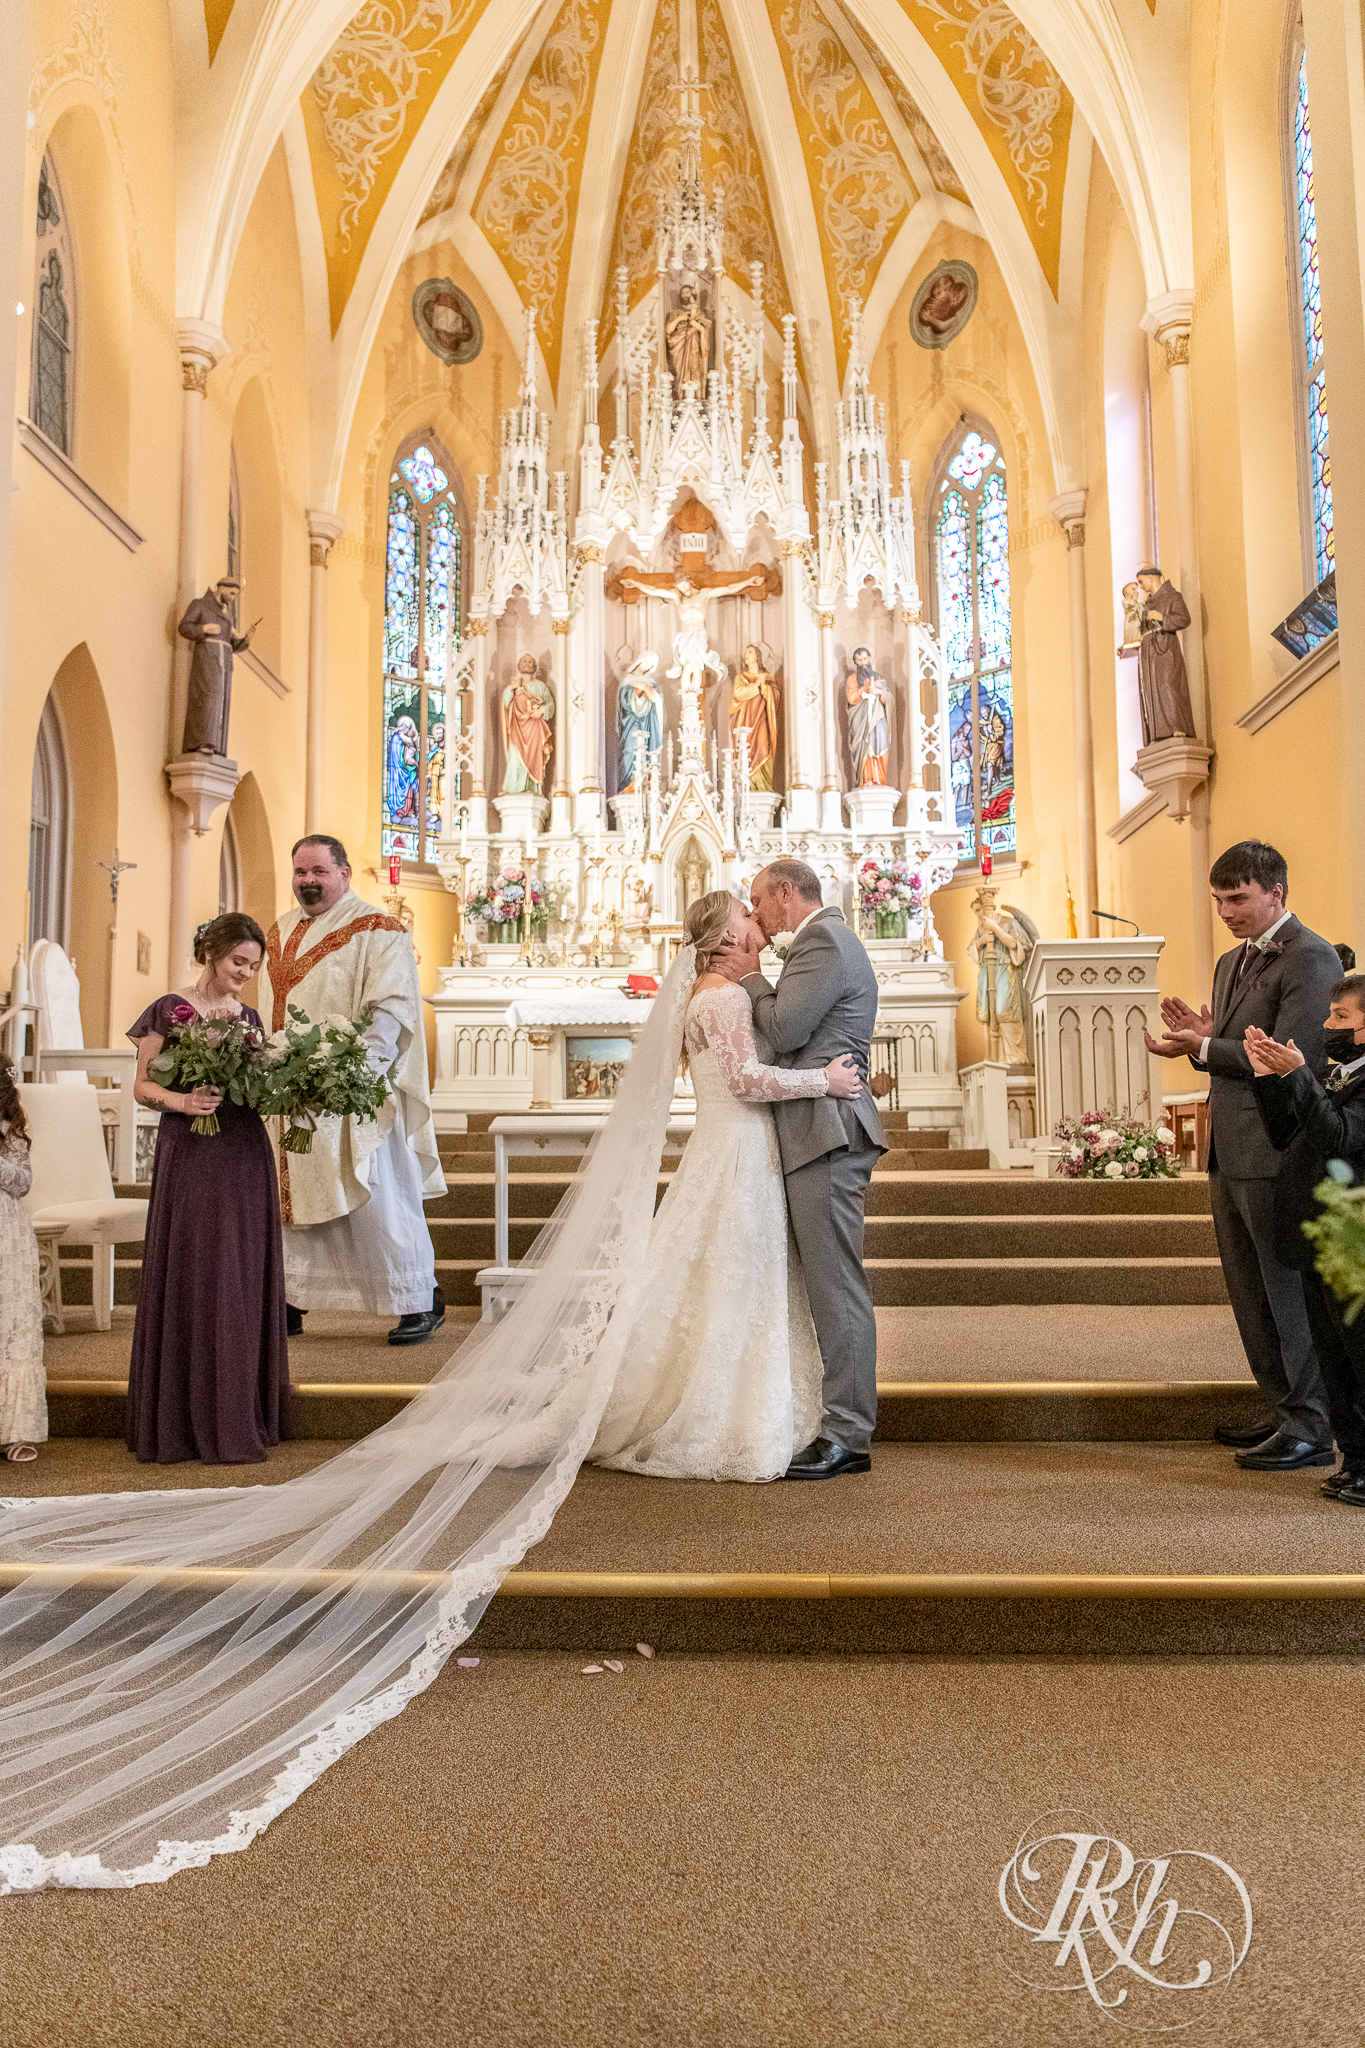 Bride and groom kiss at church wedding in New Prague, Minnesota.